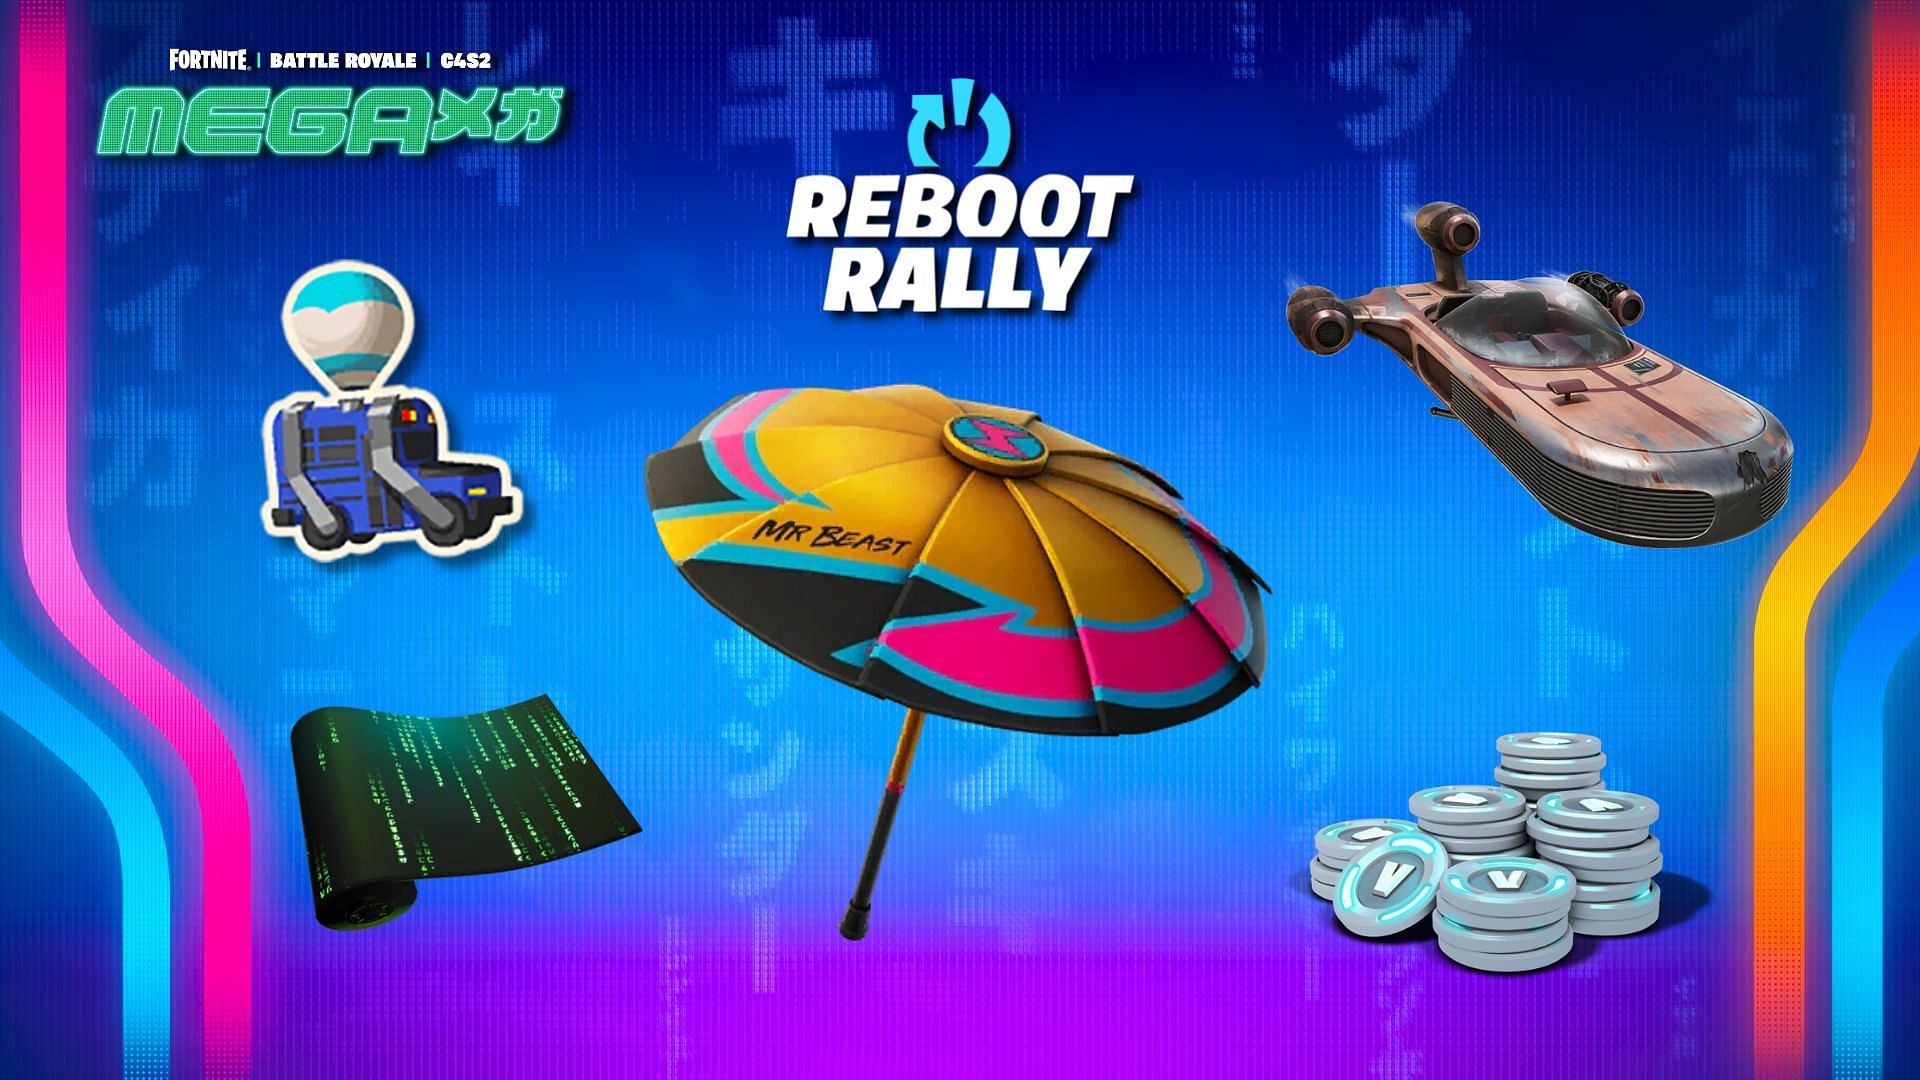 Fortnite Reboot Rally rewards